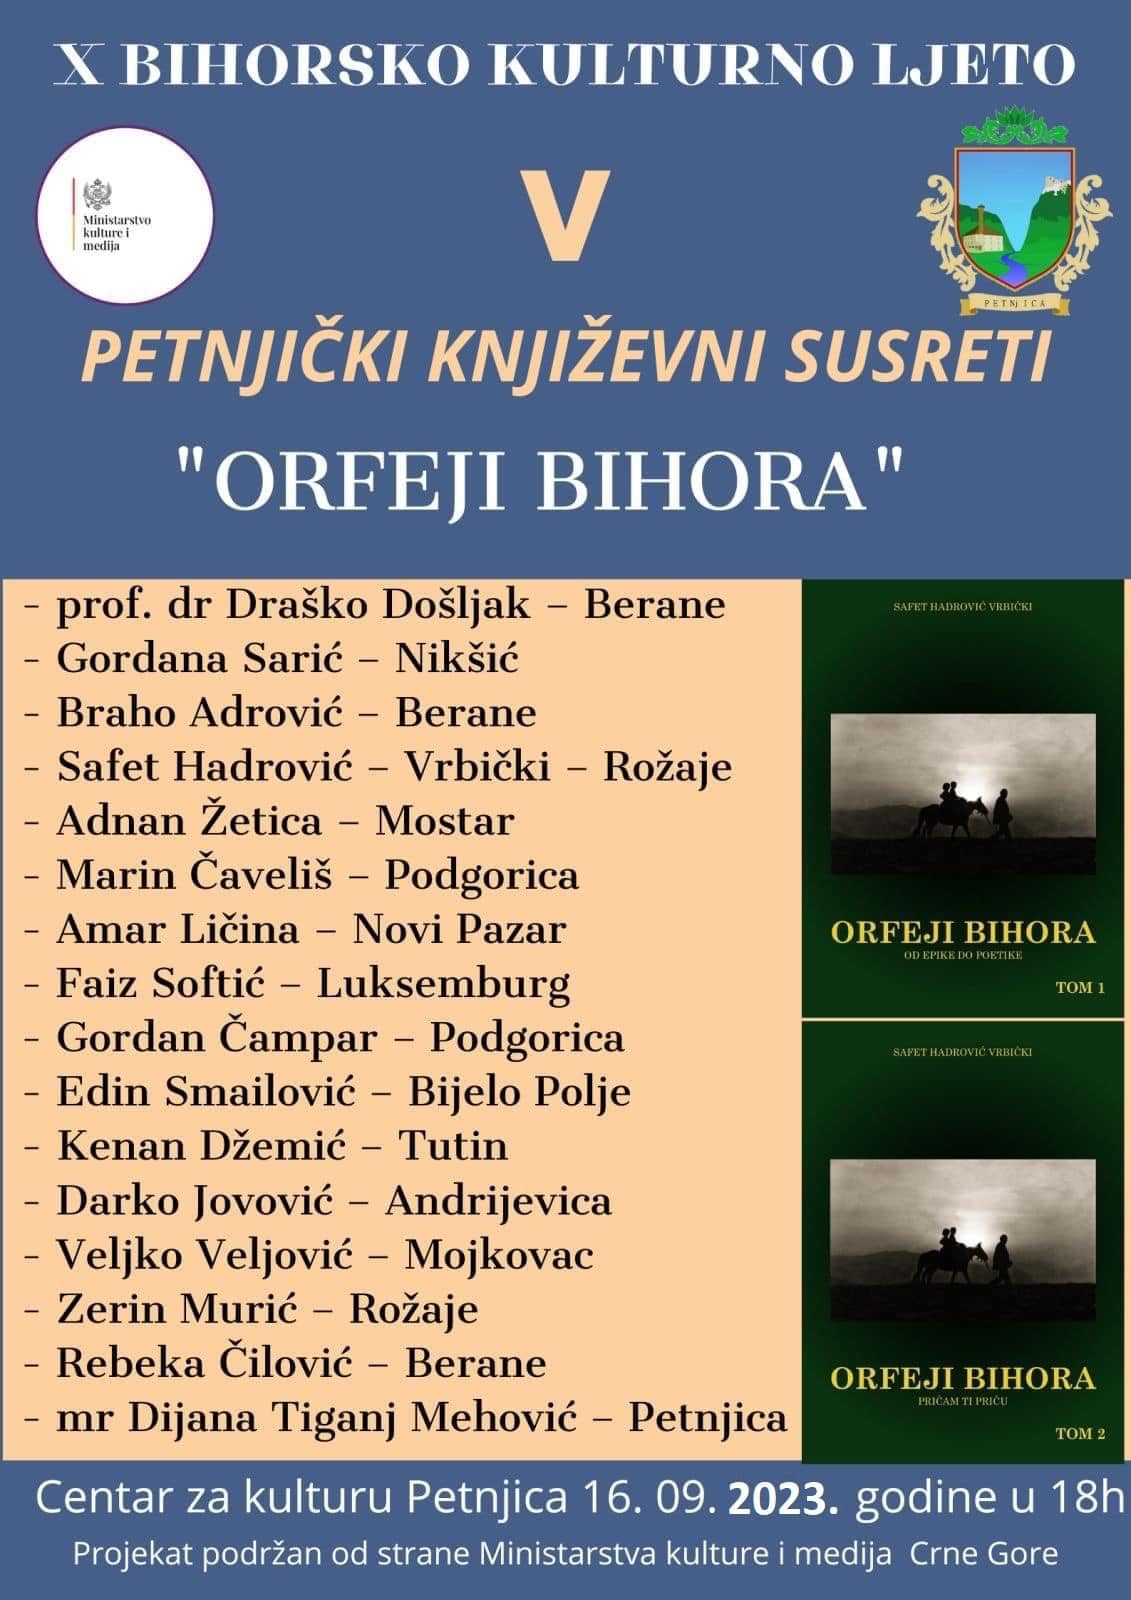 Reading by Faiz Softić <br />
"Bihor's cultural summer"<br />
